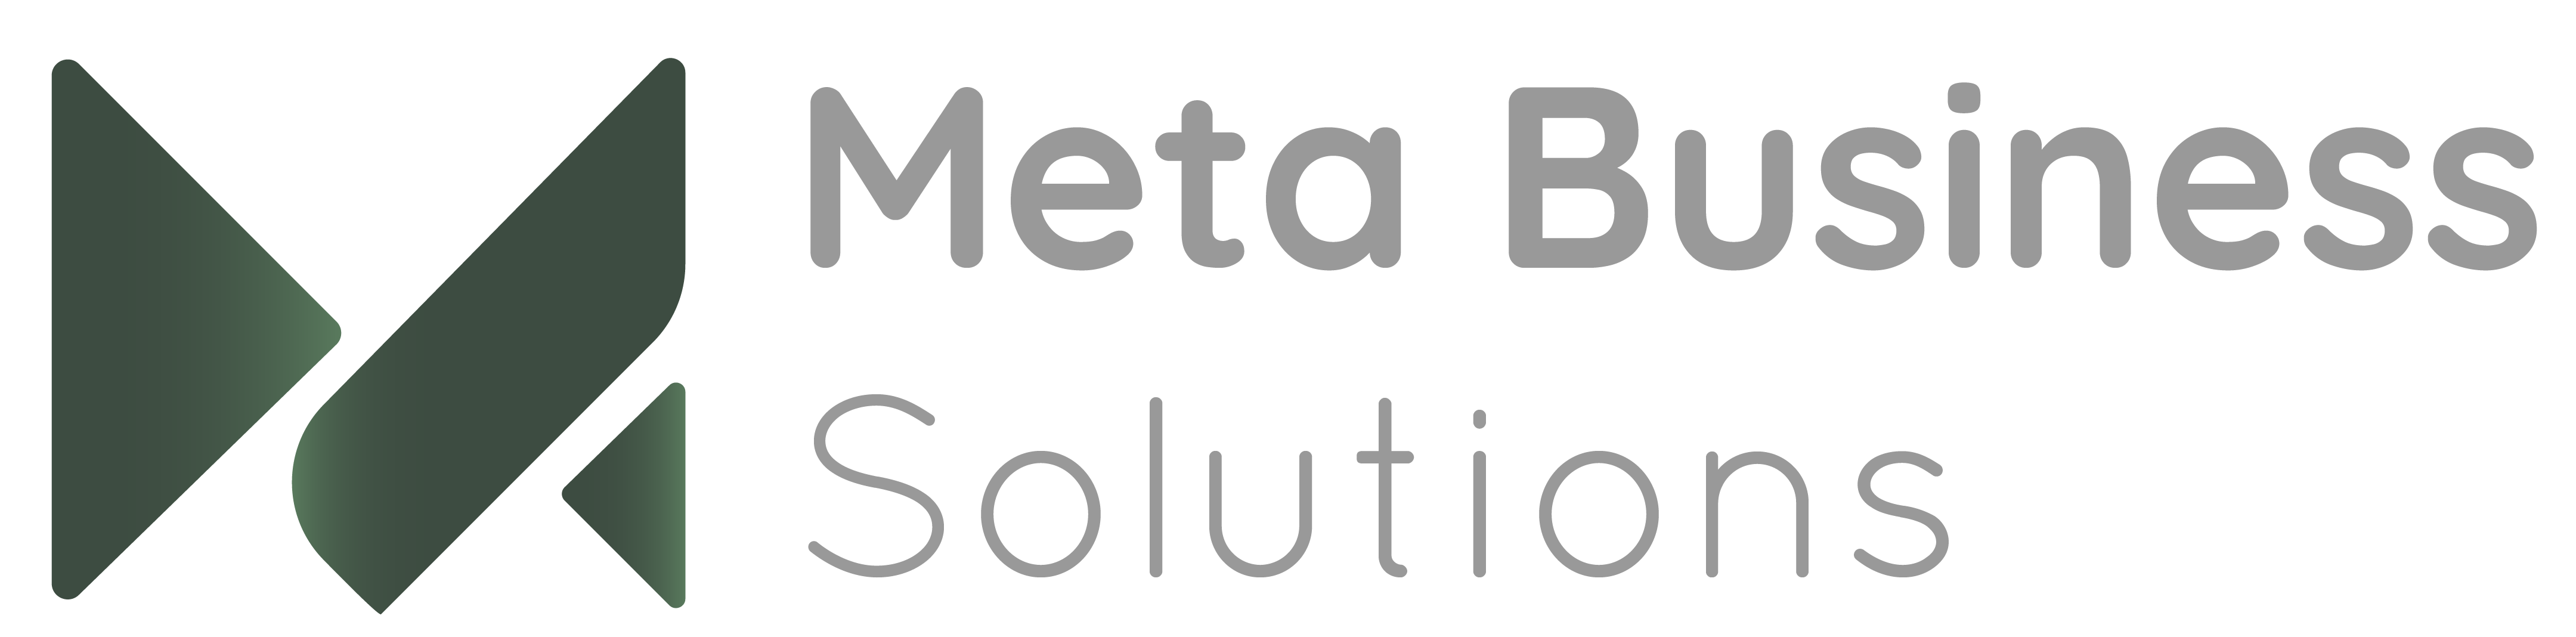 Meta Business Solutions